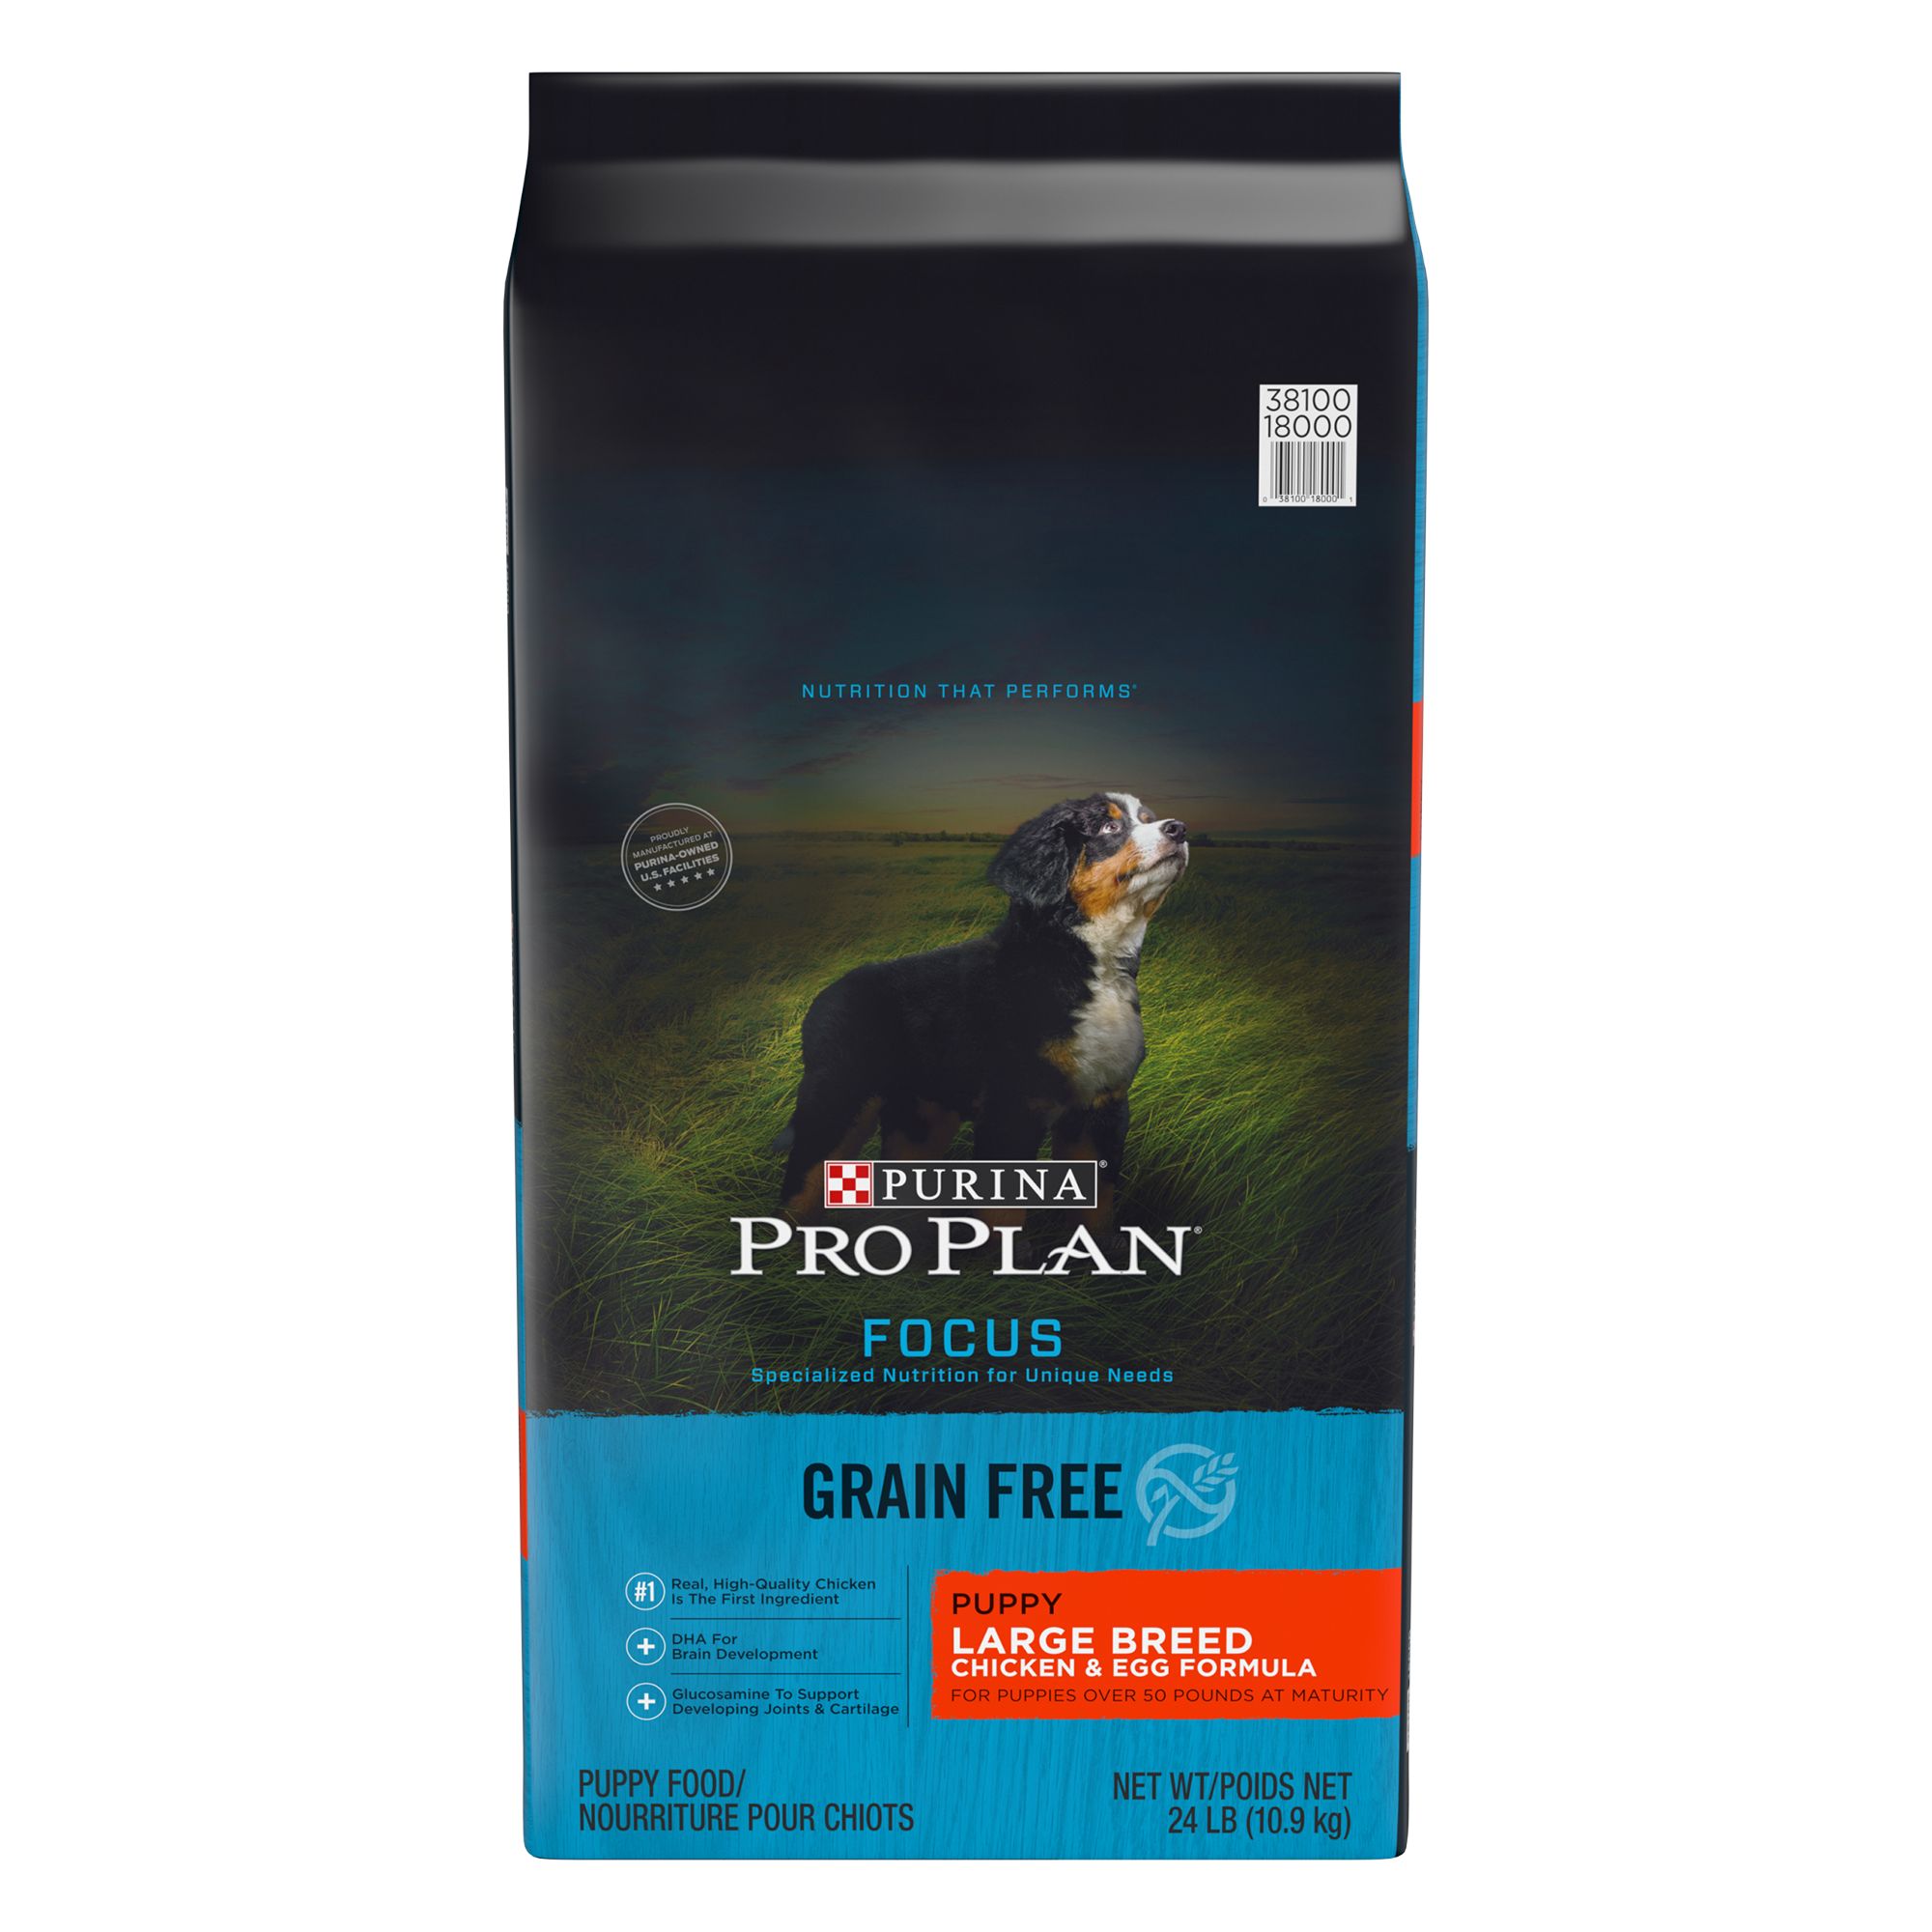 pro plan grain free dog food